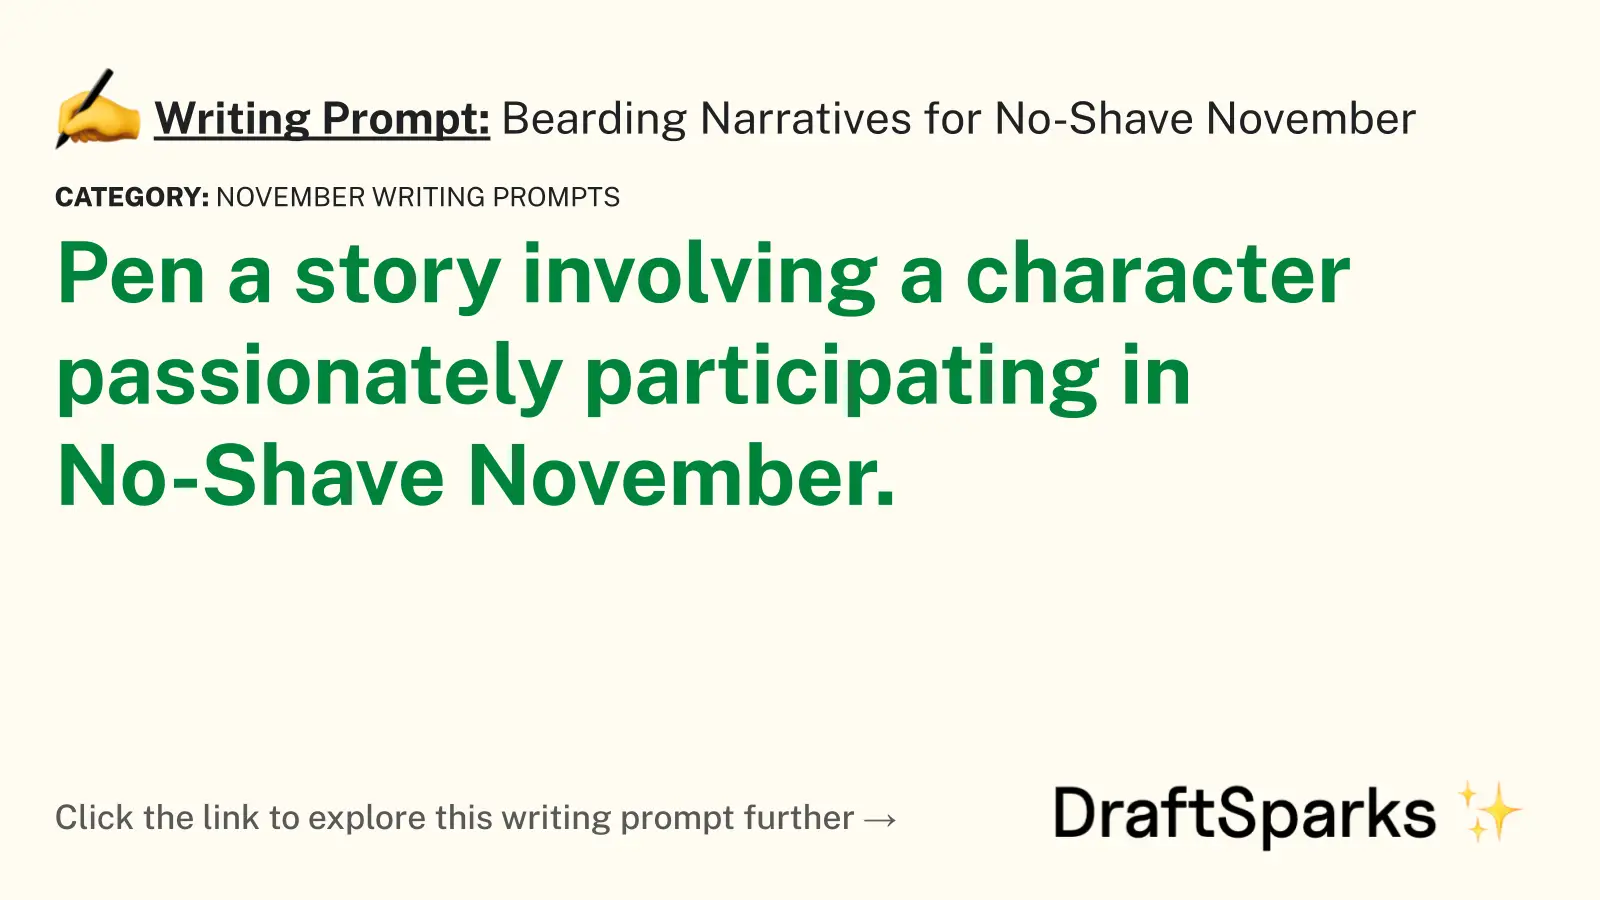 Bearding Narratives for No-Shave November